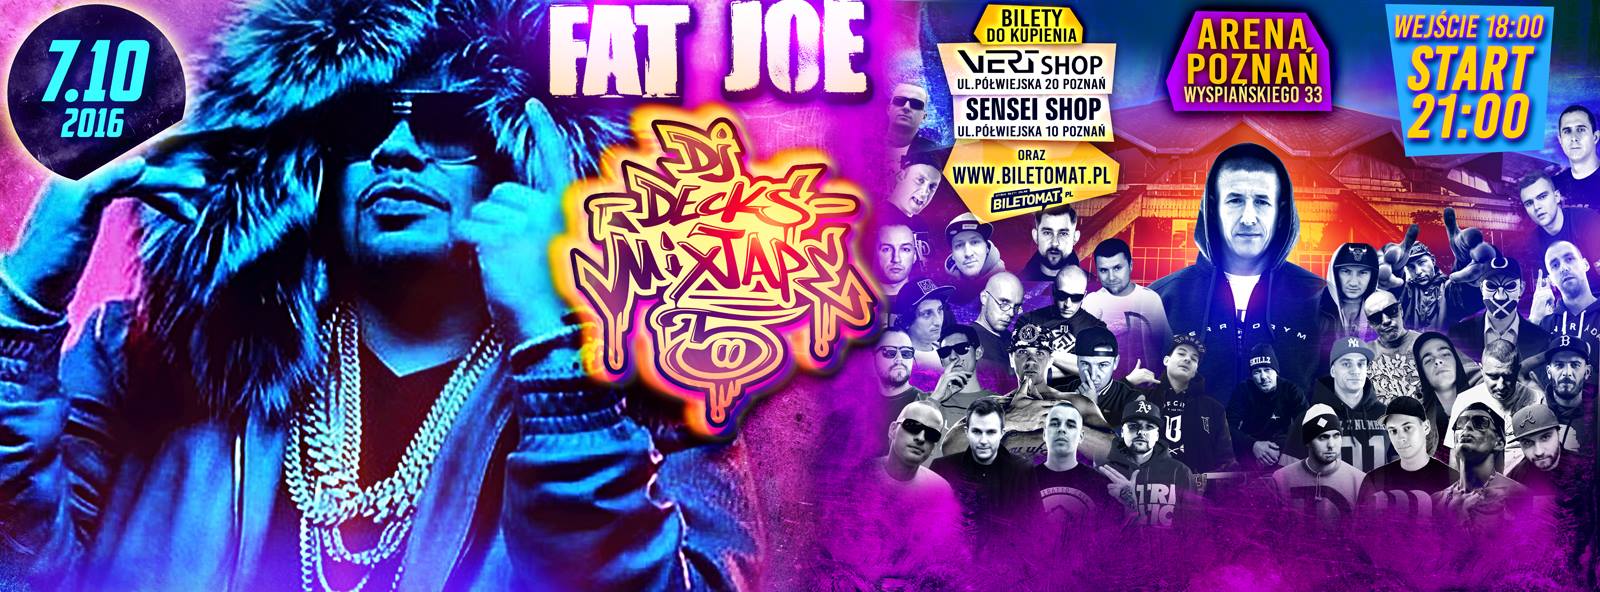 Fat Joe / Dj Decks Mixtape vol. 5 Arena 2016